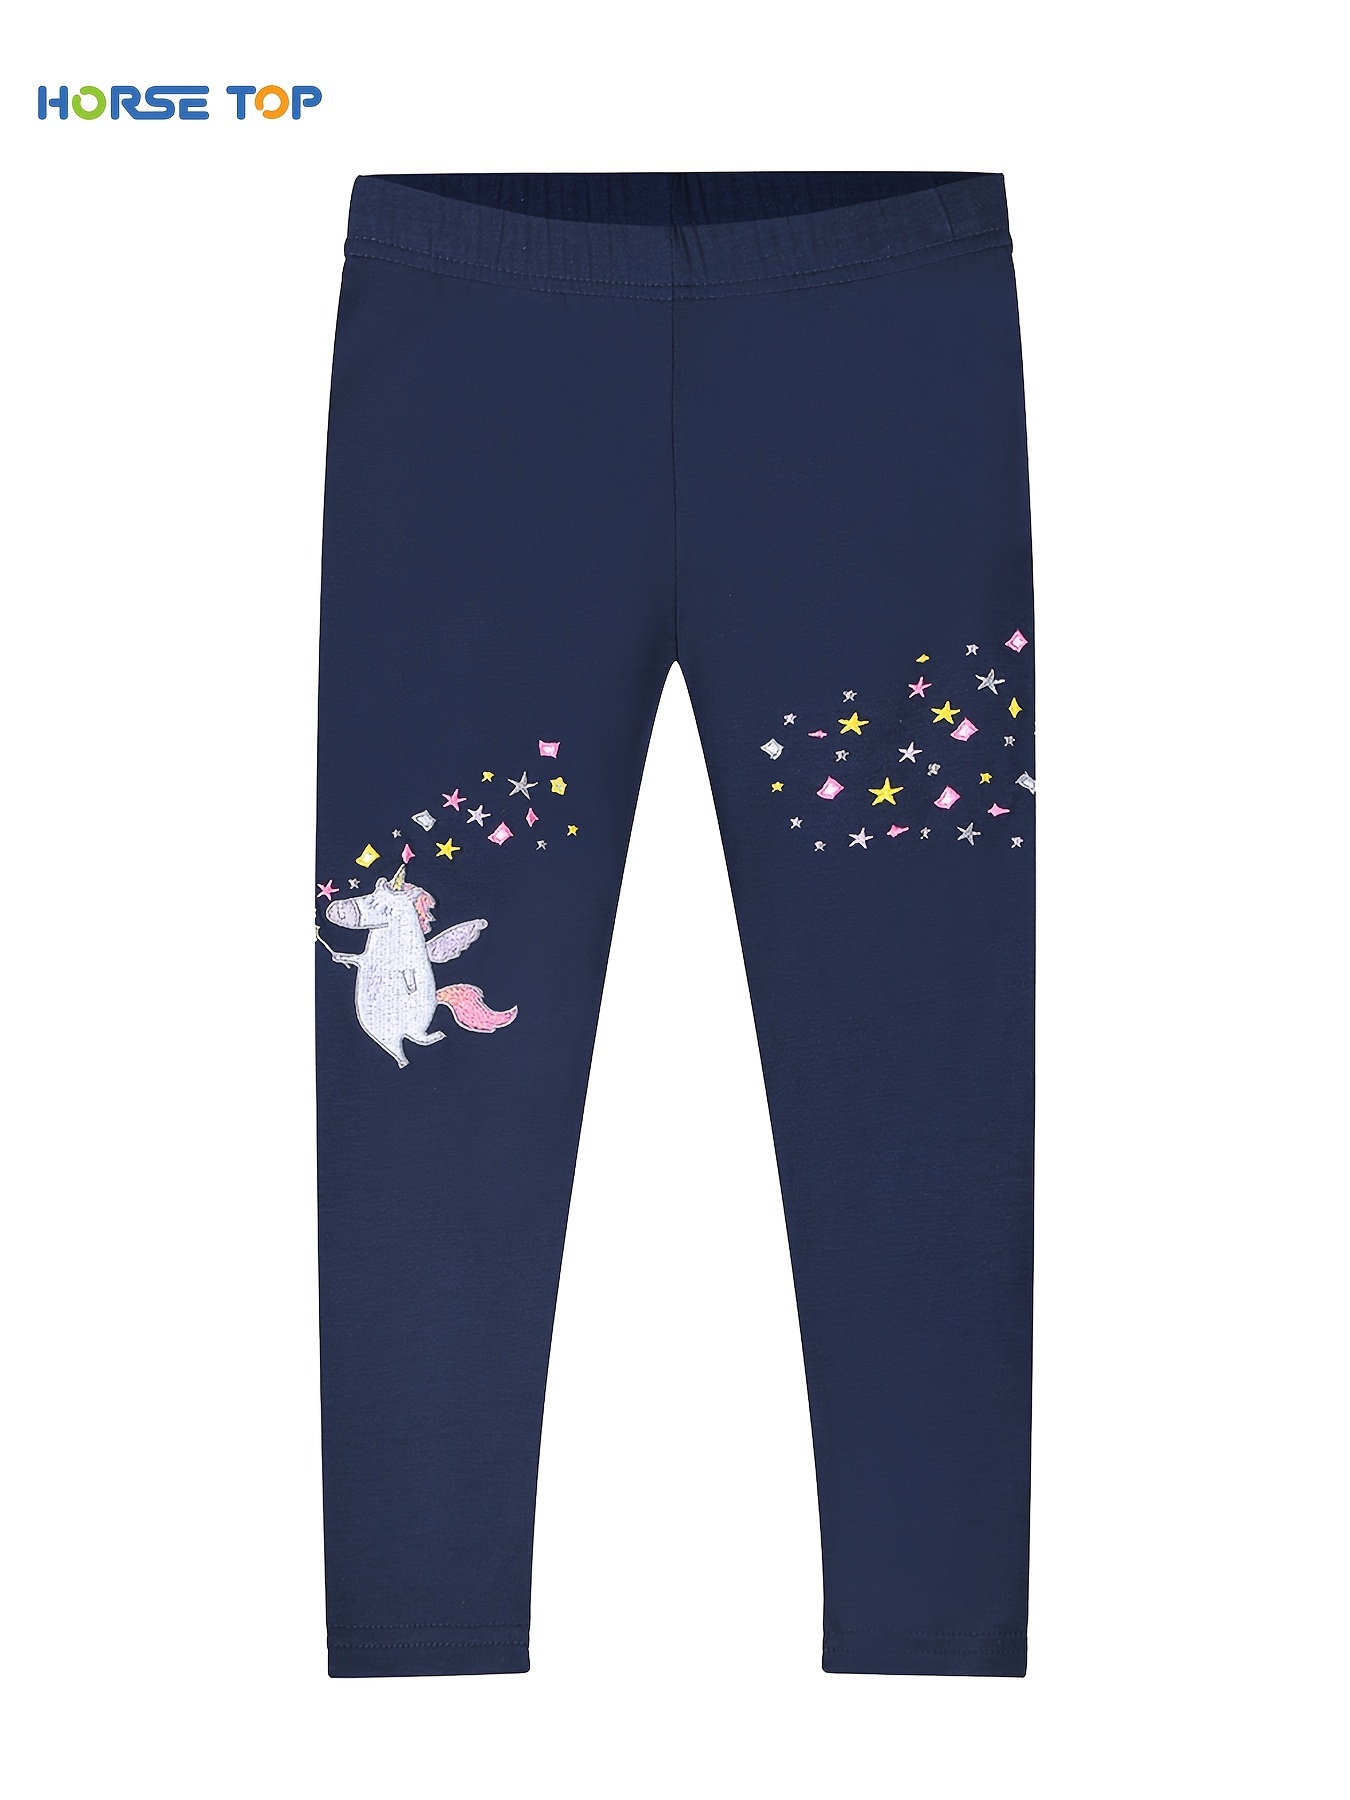  Leggings de unicornio para niña, leggings de arco iris